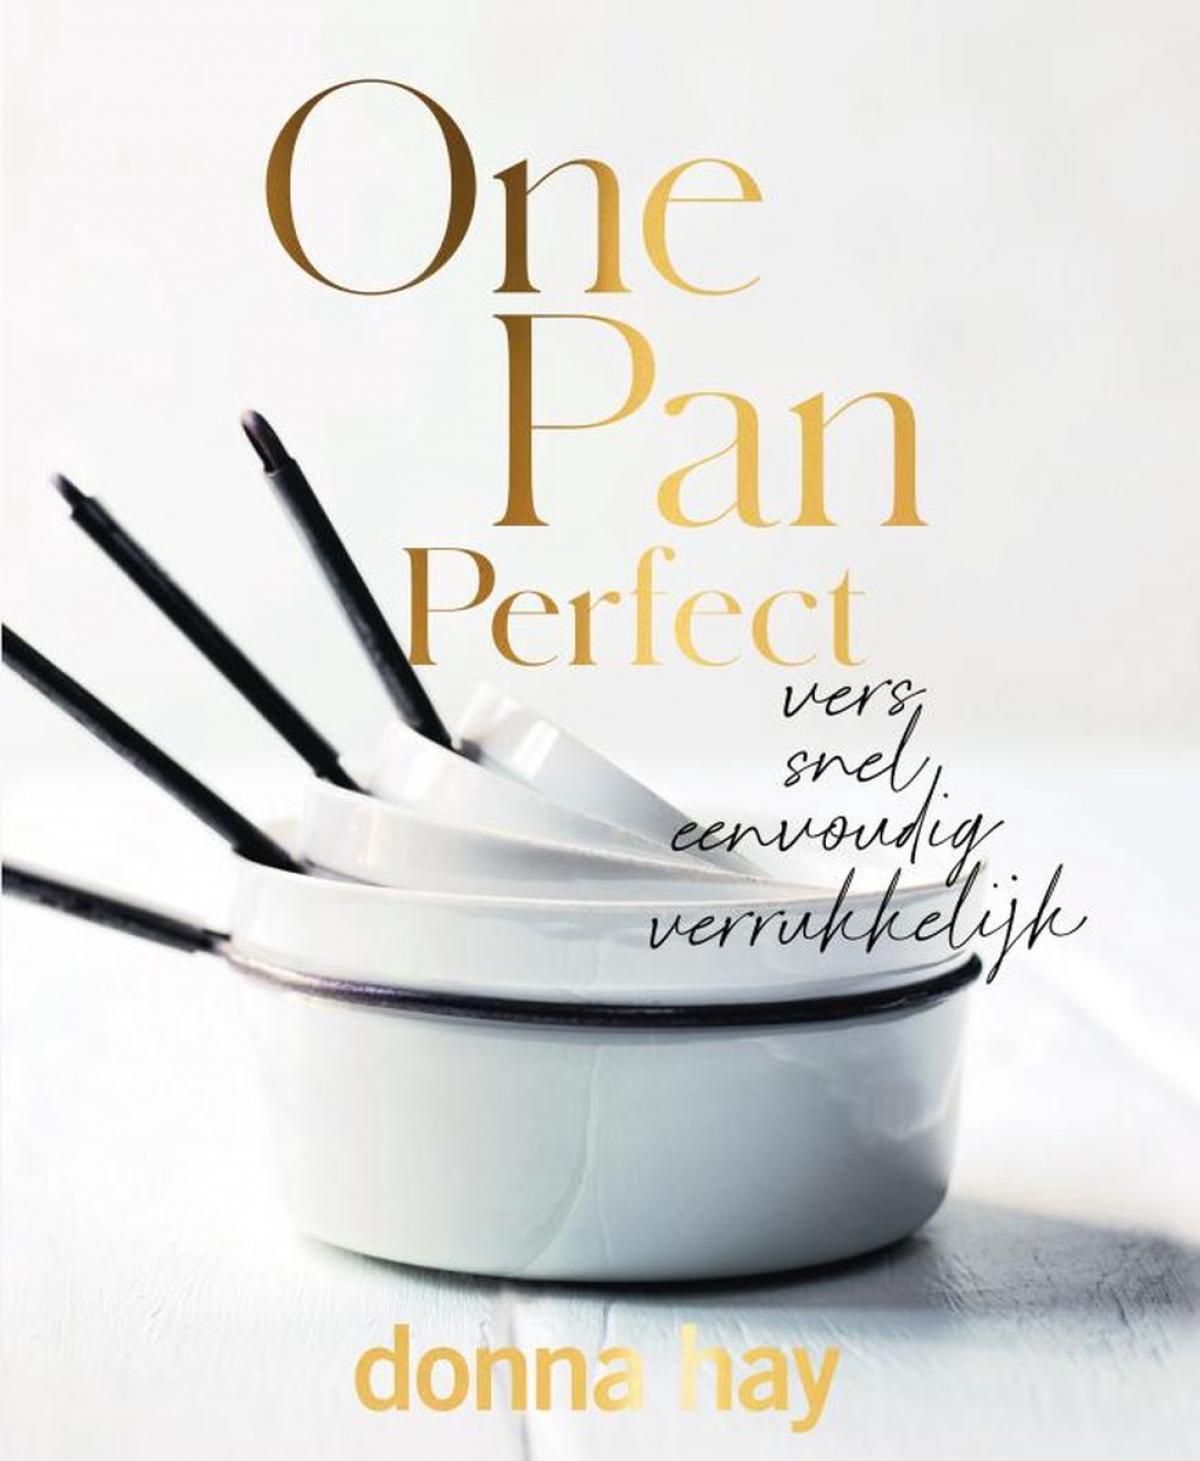 'One Pan Perfect' van Donna Hay